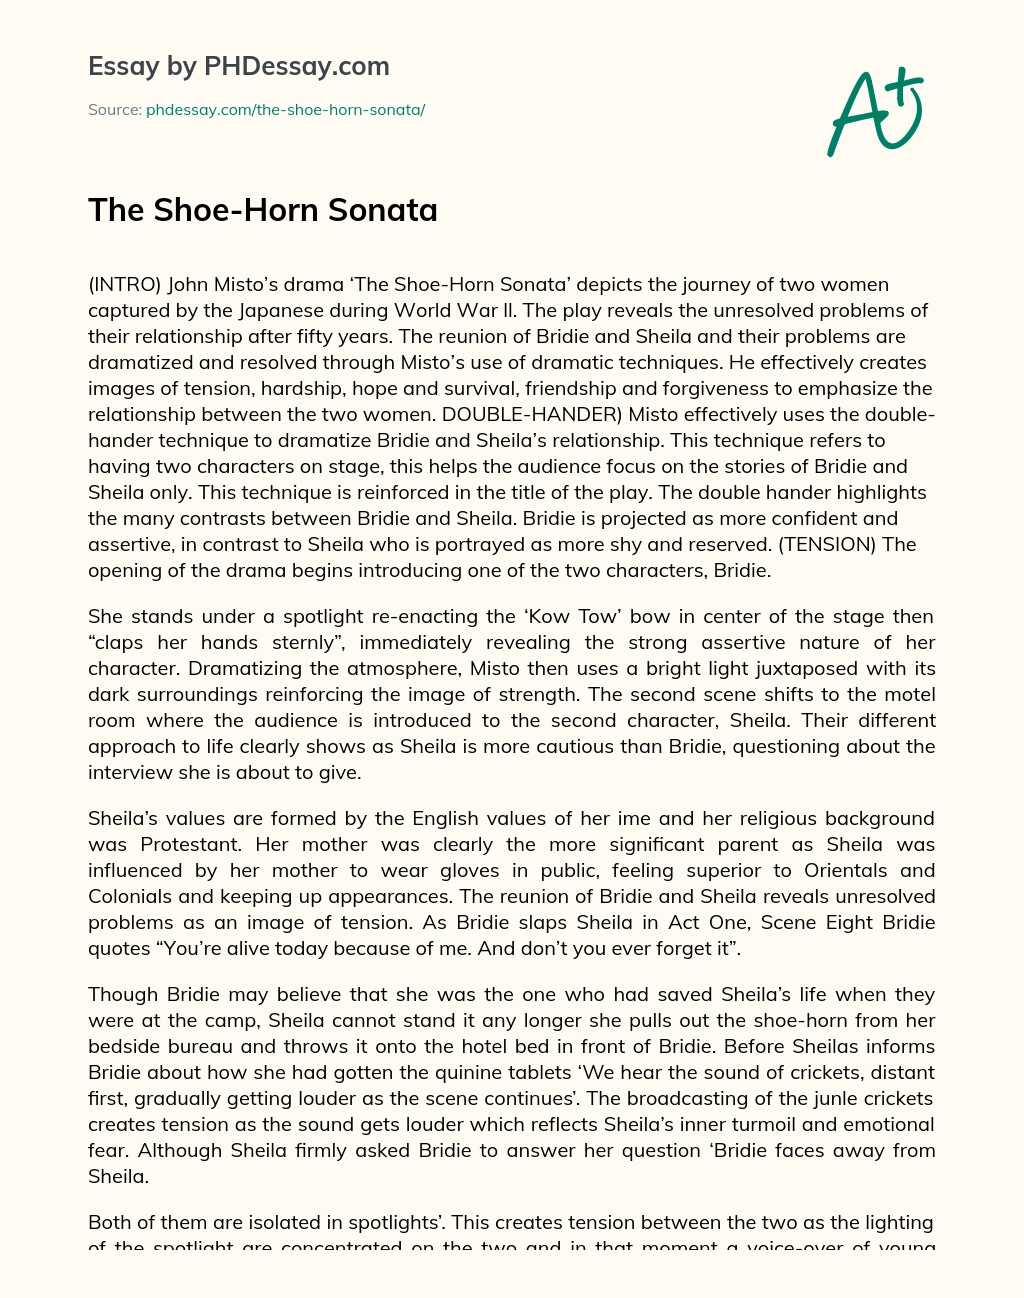 The Shoe-Horn Sonata essay